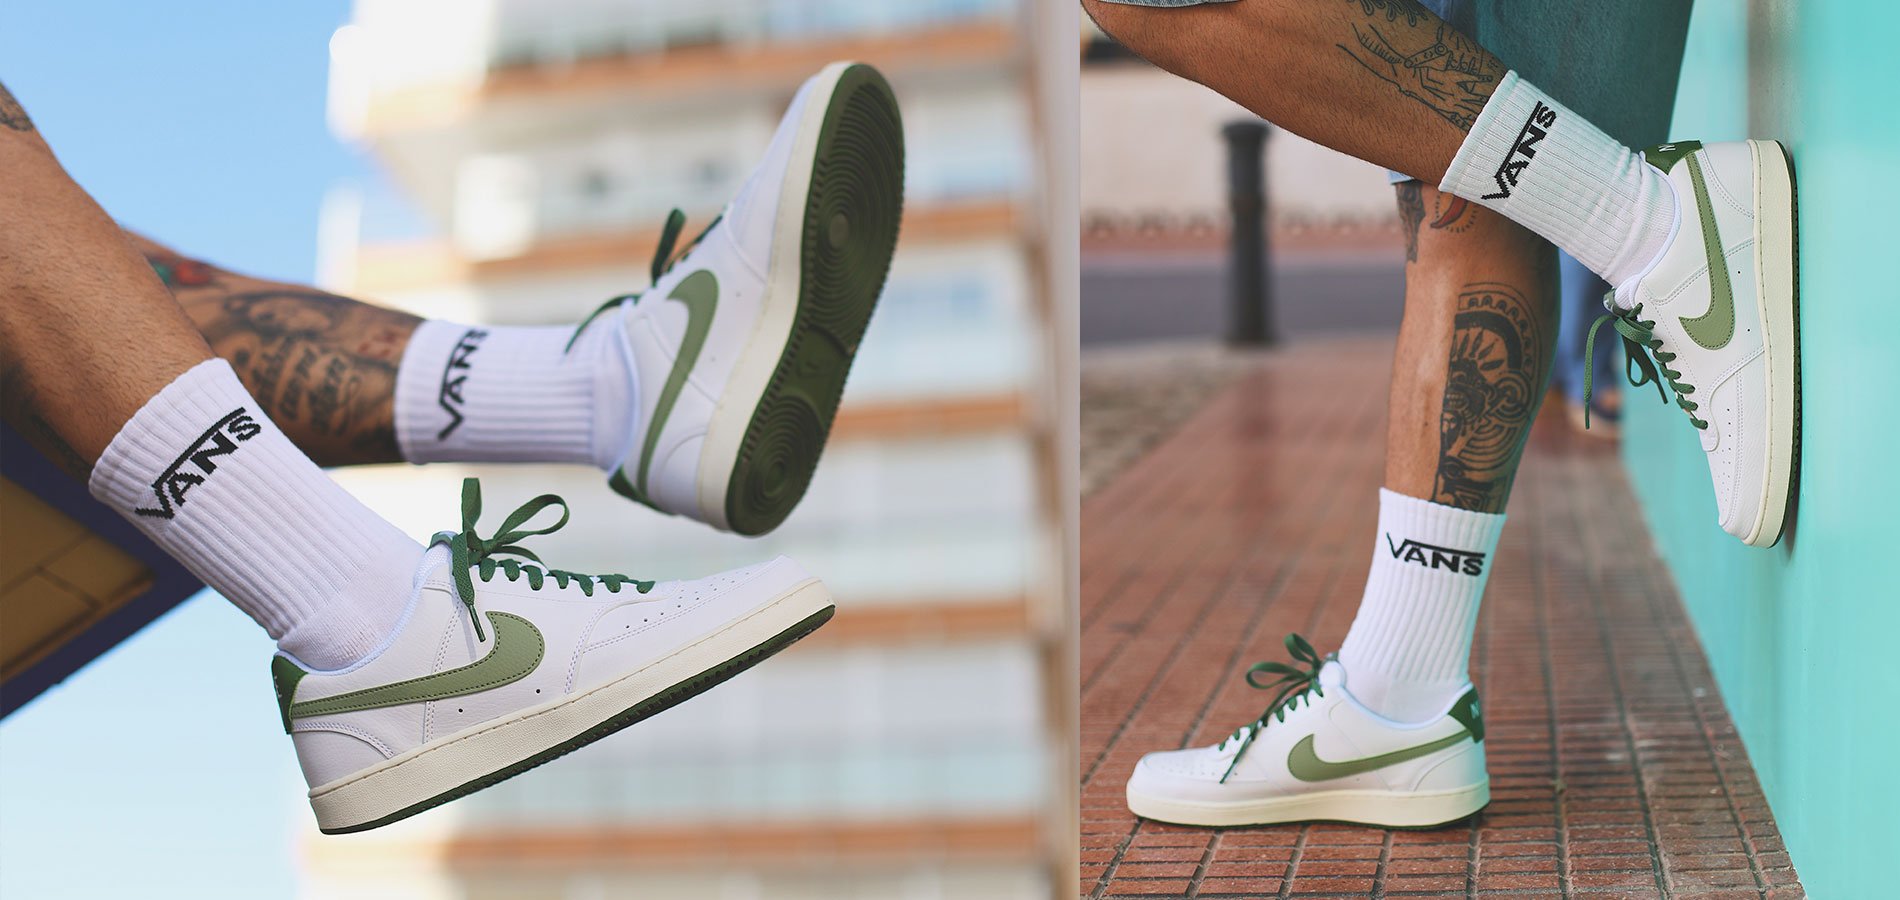 Combina tus looks con zapatillas verdes para hombre, Blog ZapatosMayka